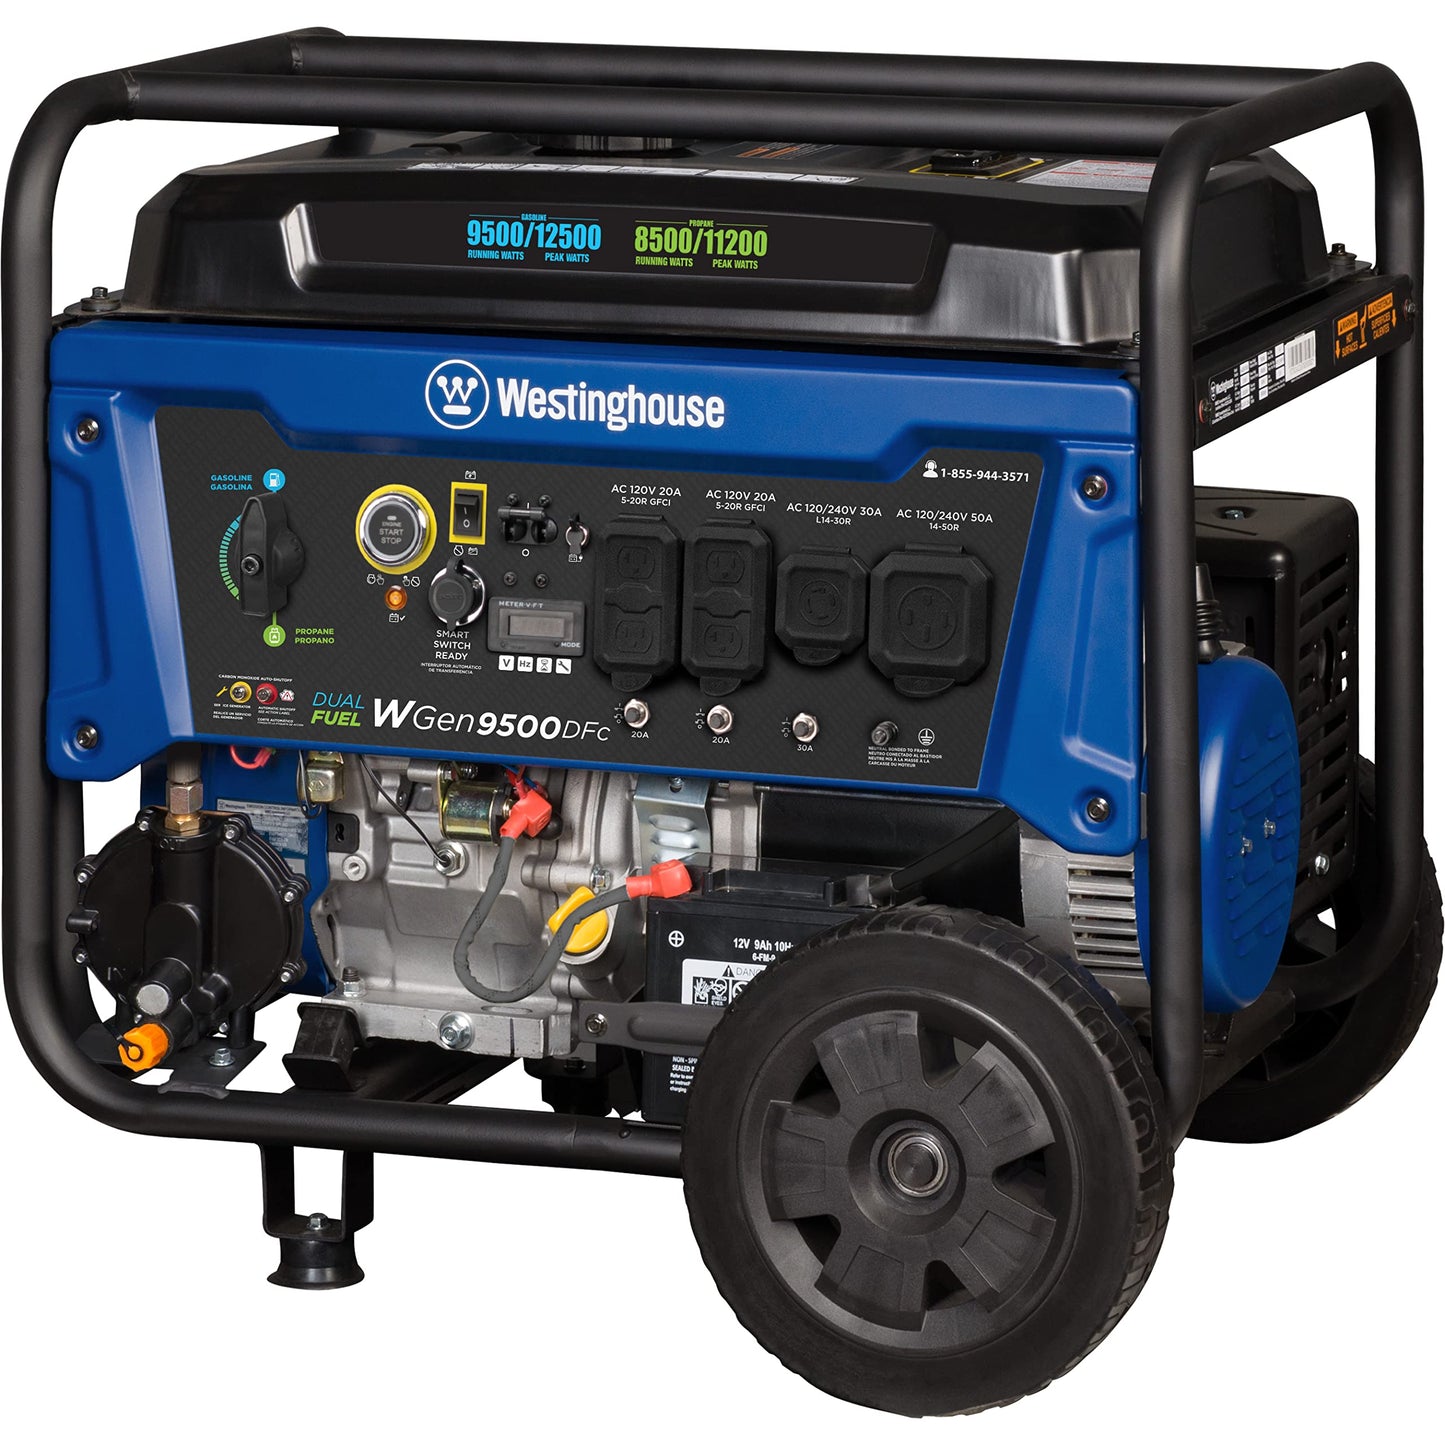 Westinghouse Outdoor Power Equipment 12500 Peak Watt Dual Fuel Home Backup Portable Generator with CO Sensor